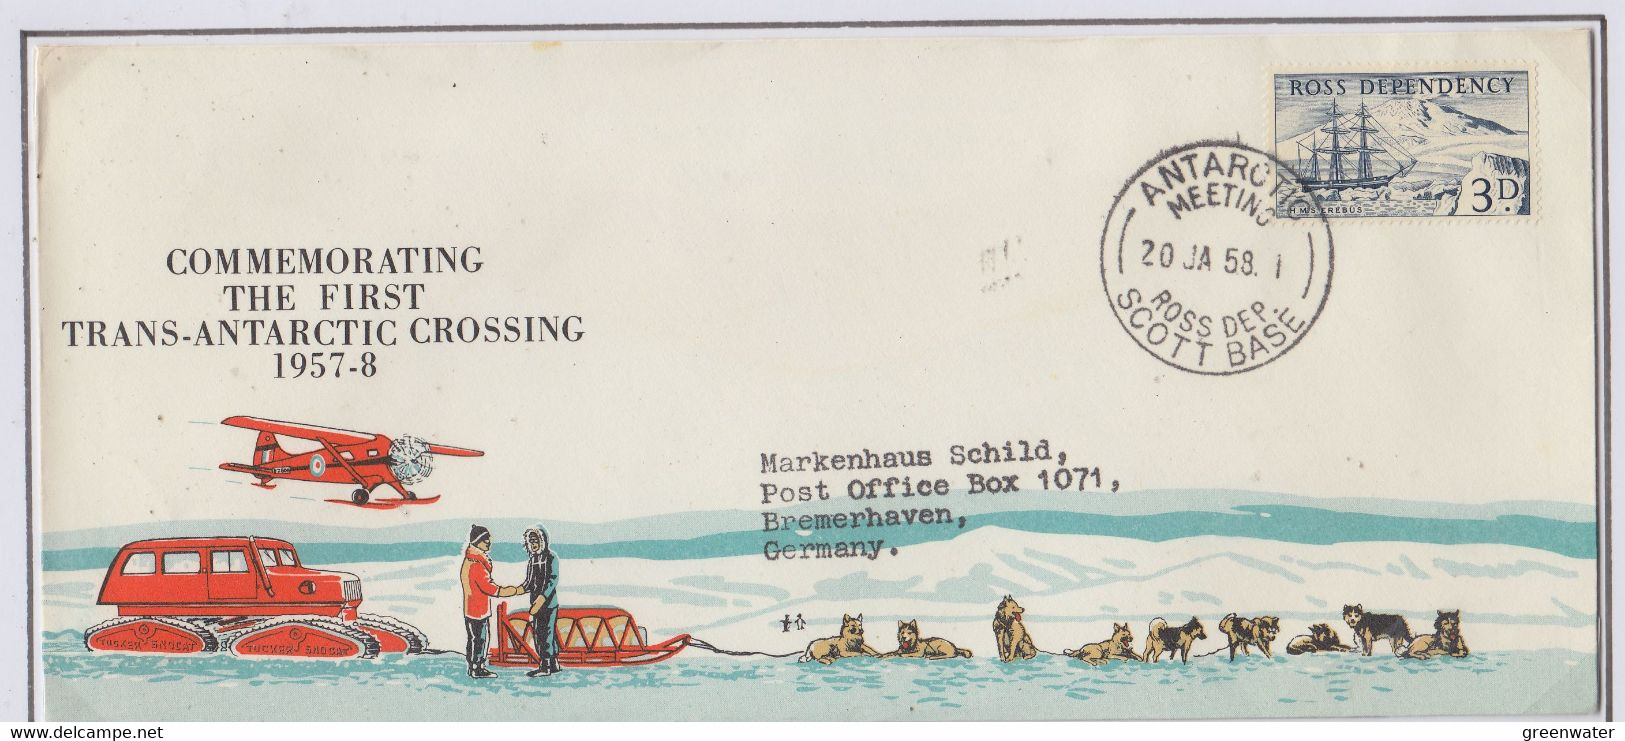 Ross Dependency 1958 Commemorating 1st Trans-Antarctic Crossing Cover Ca Scott Base 20 JA 58 (BO167) - Covers & Documents